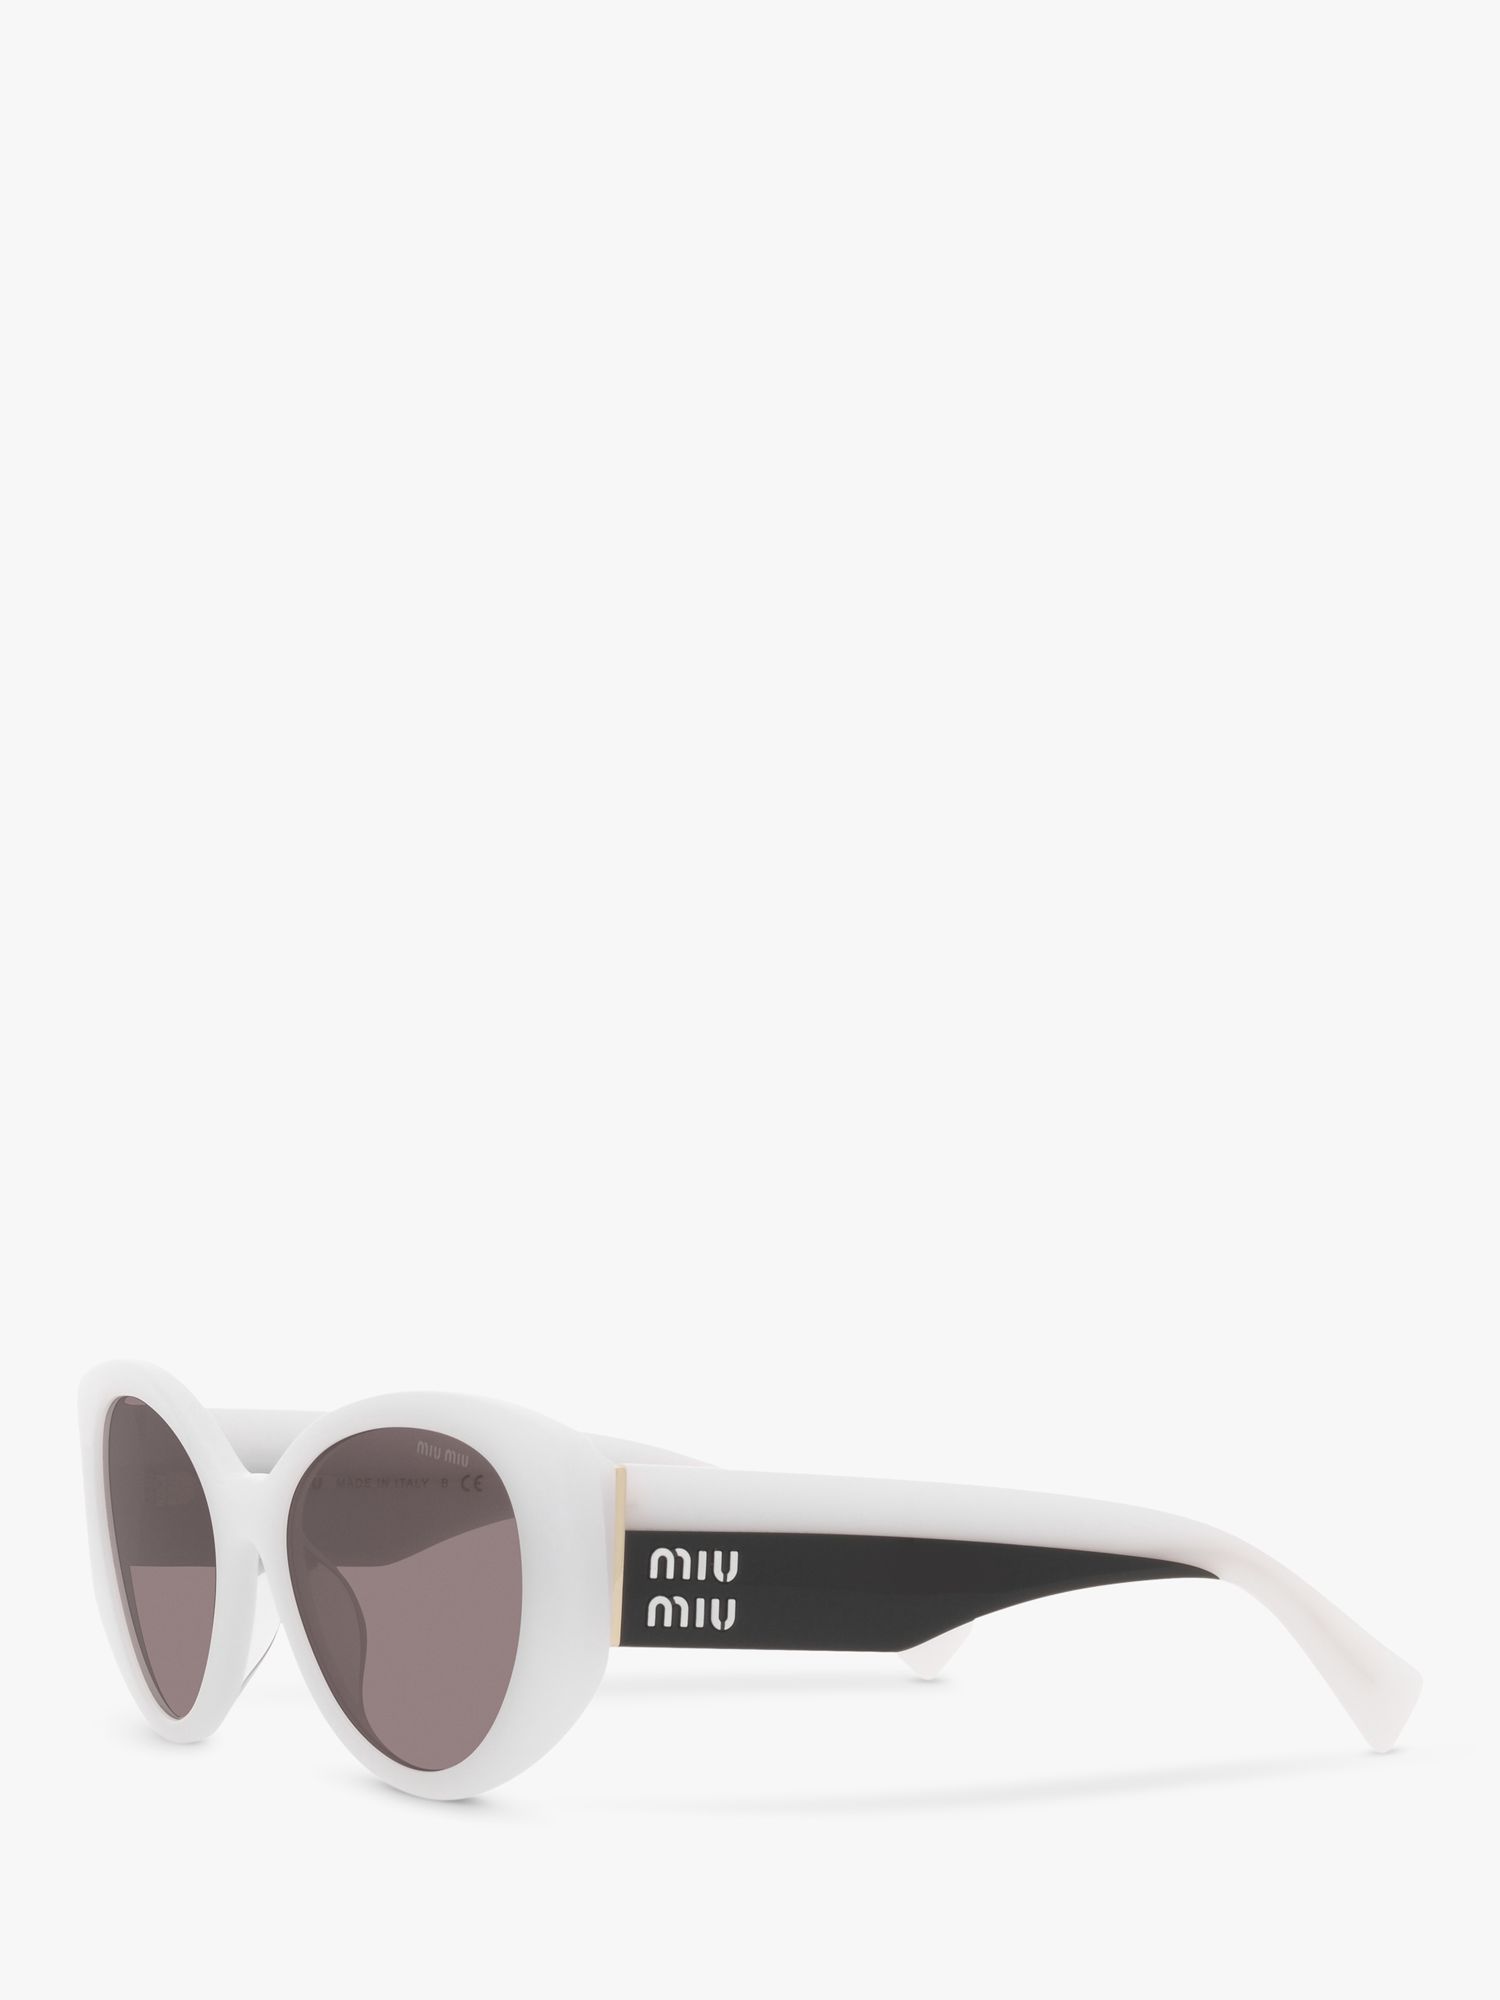 Miu Miu MU 03WS Women's Irregular Sunglasses, White/Grey at John Lewis ...